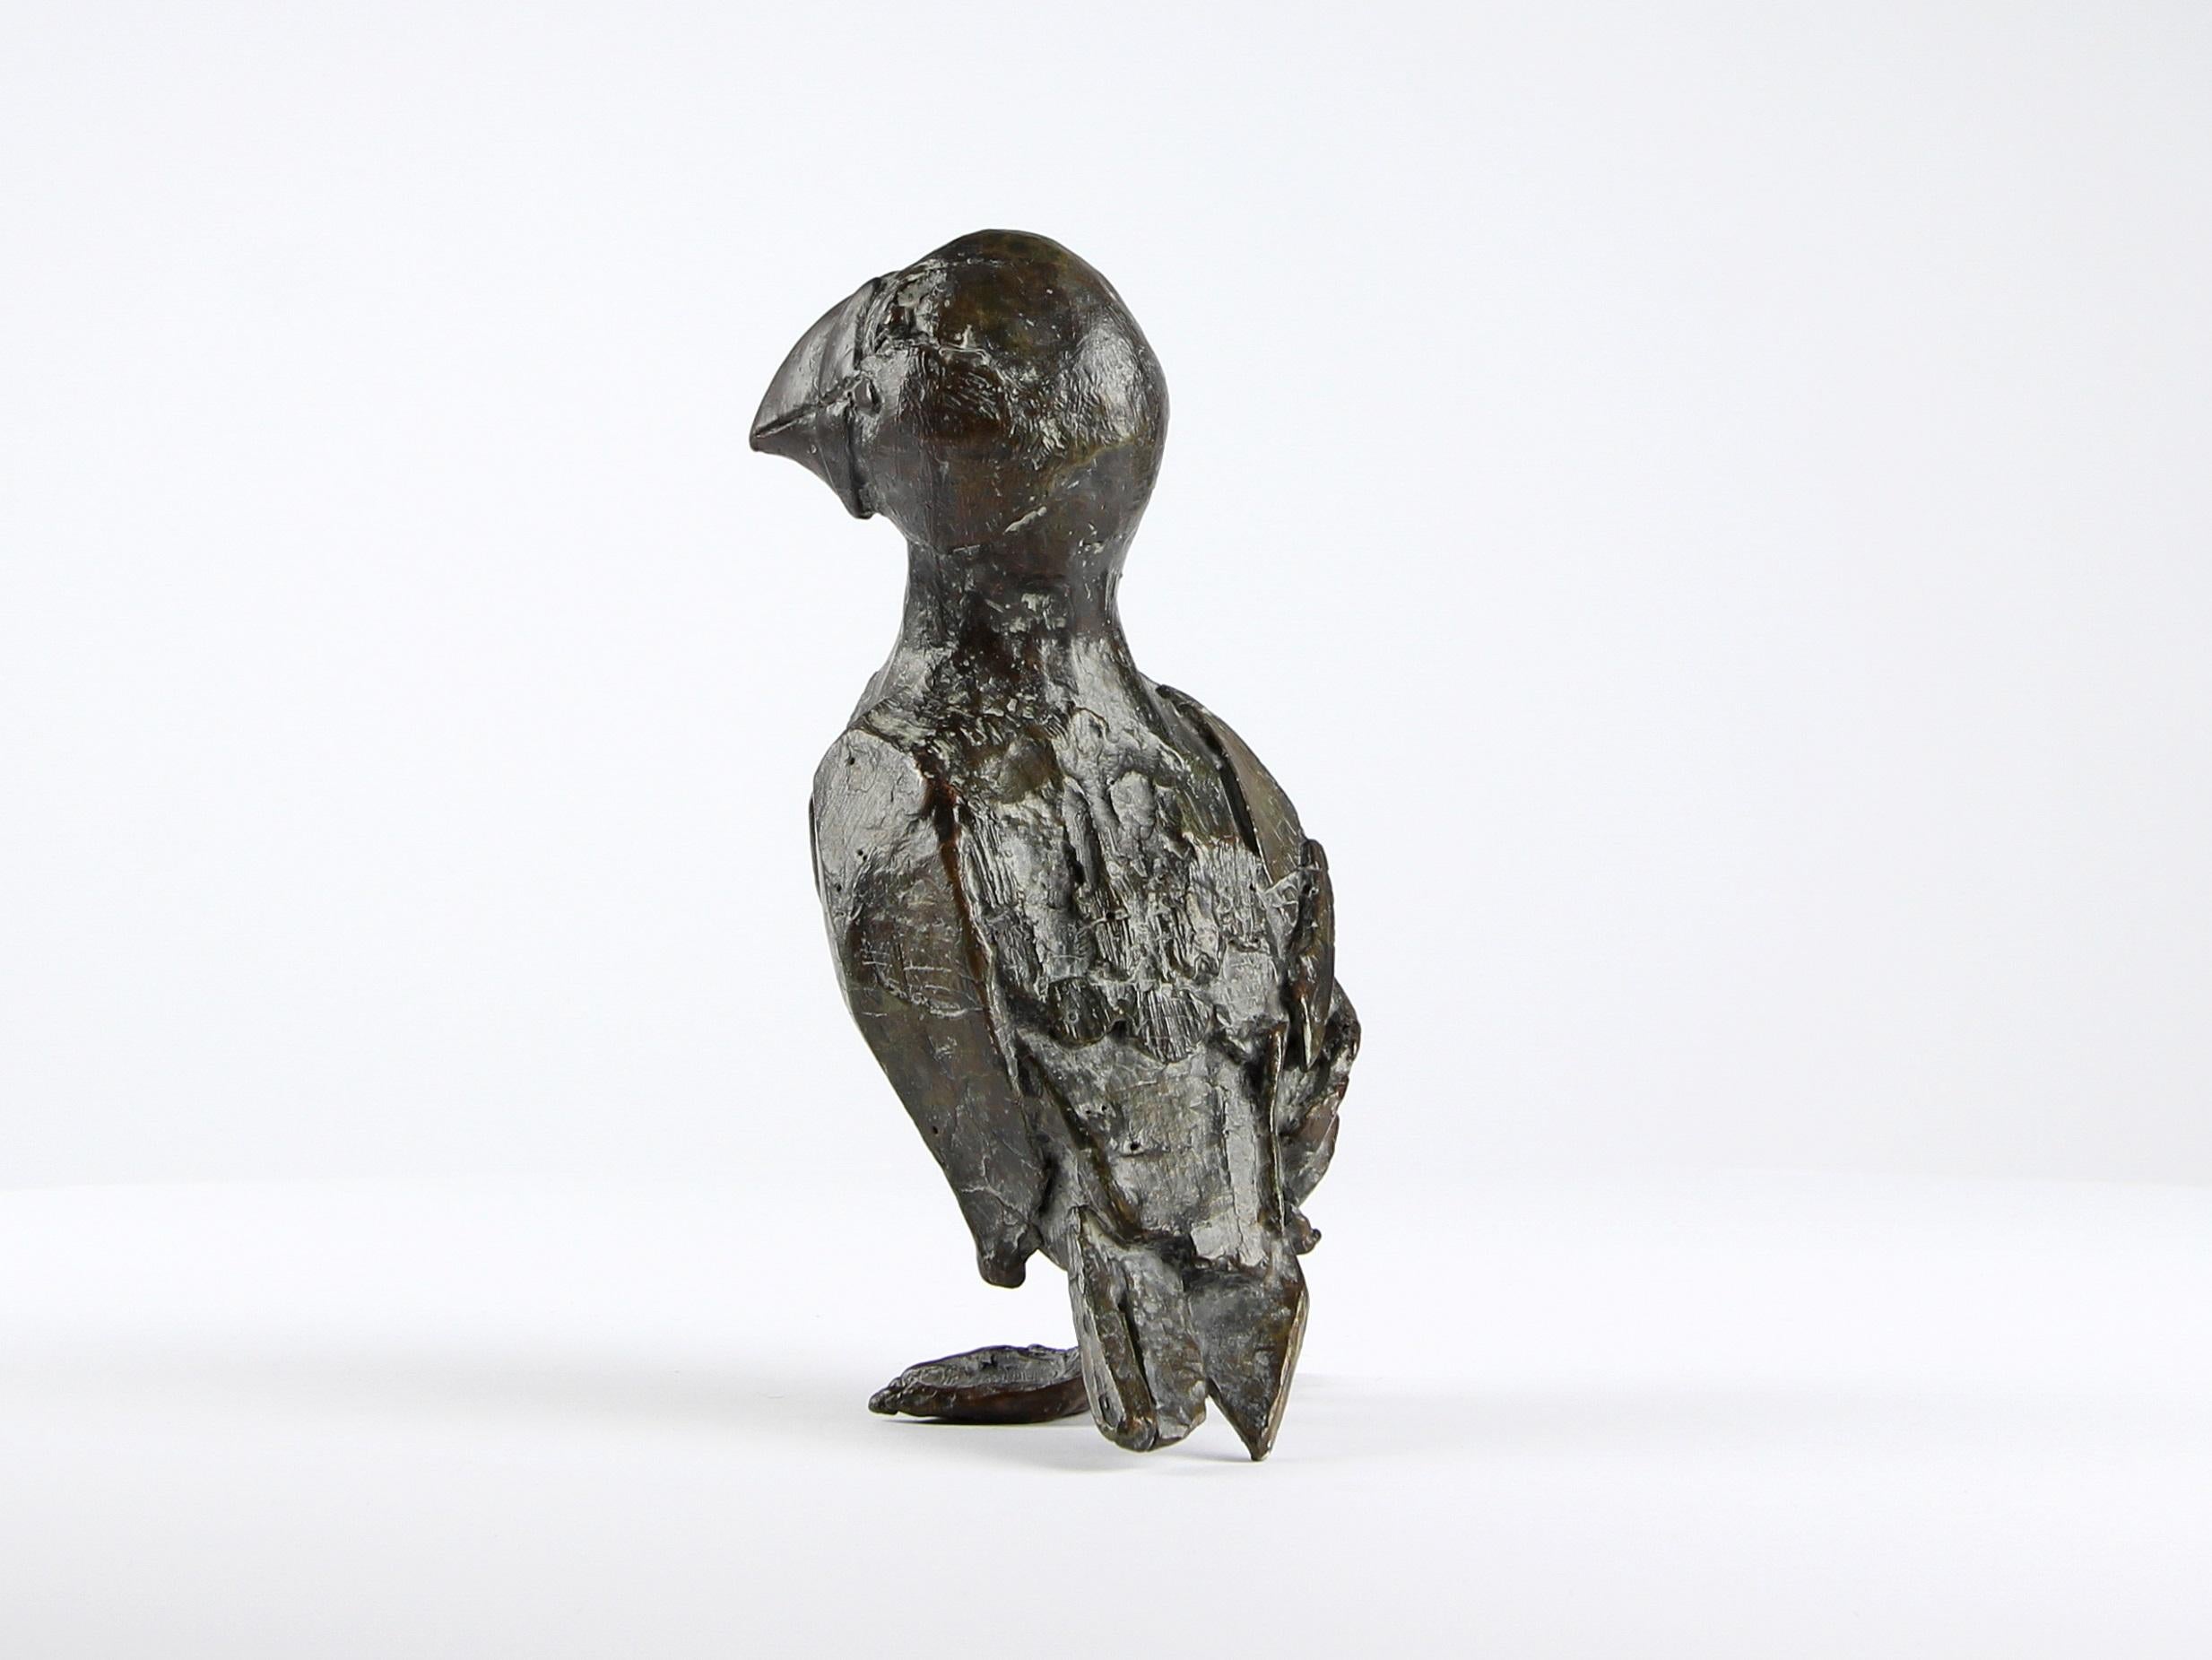 Puffin by Chésade - Bronze sculpture, animal art, expressionism, realism, bird For Sale 3